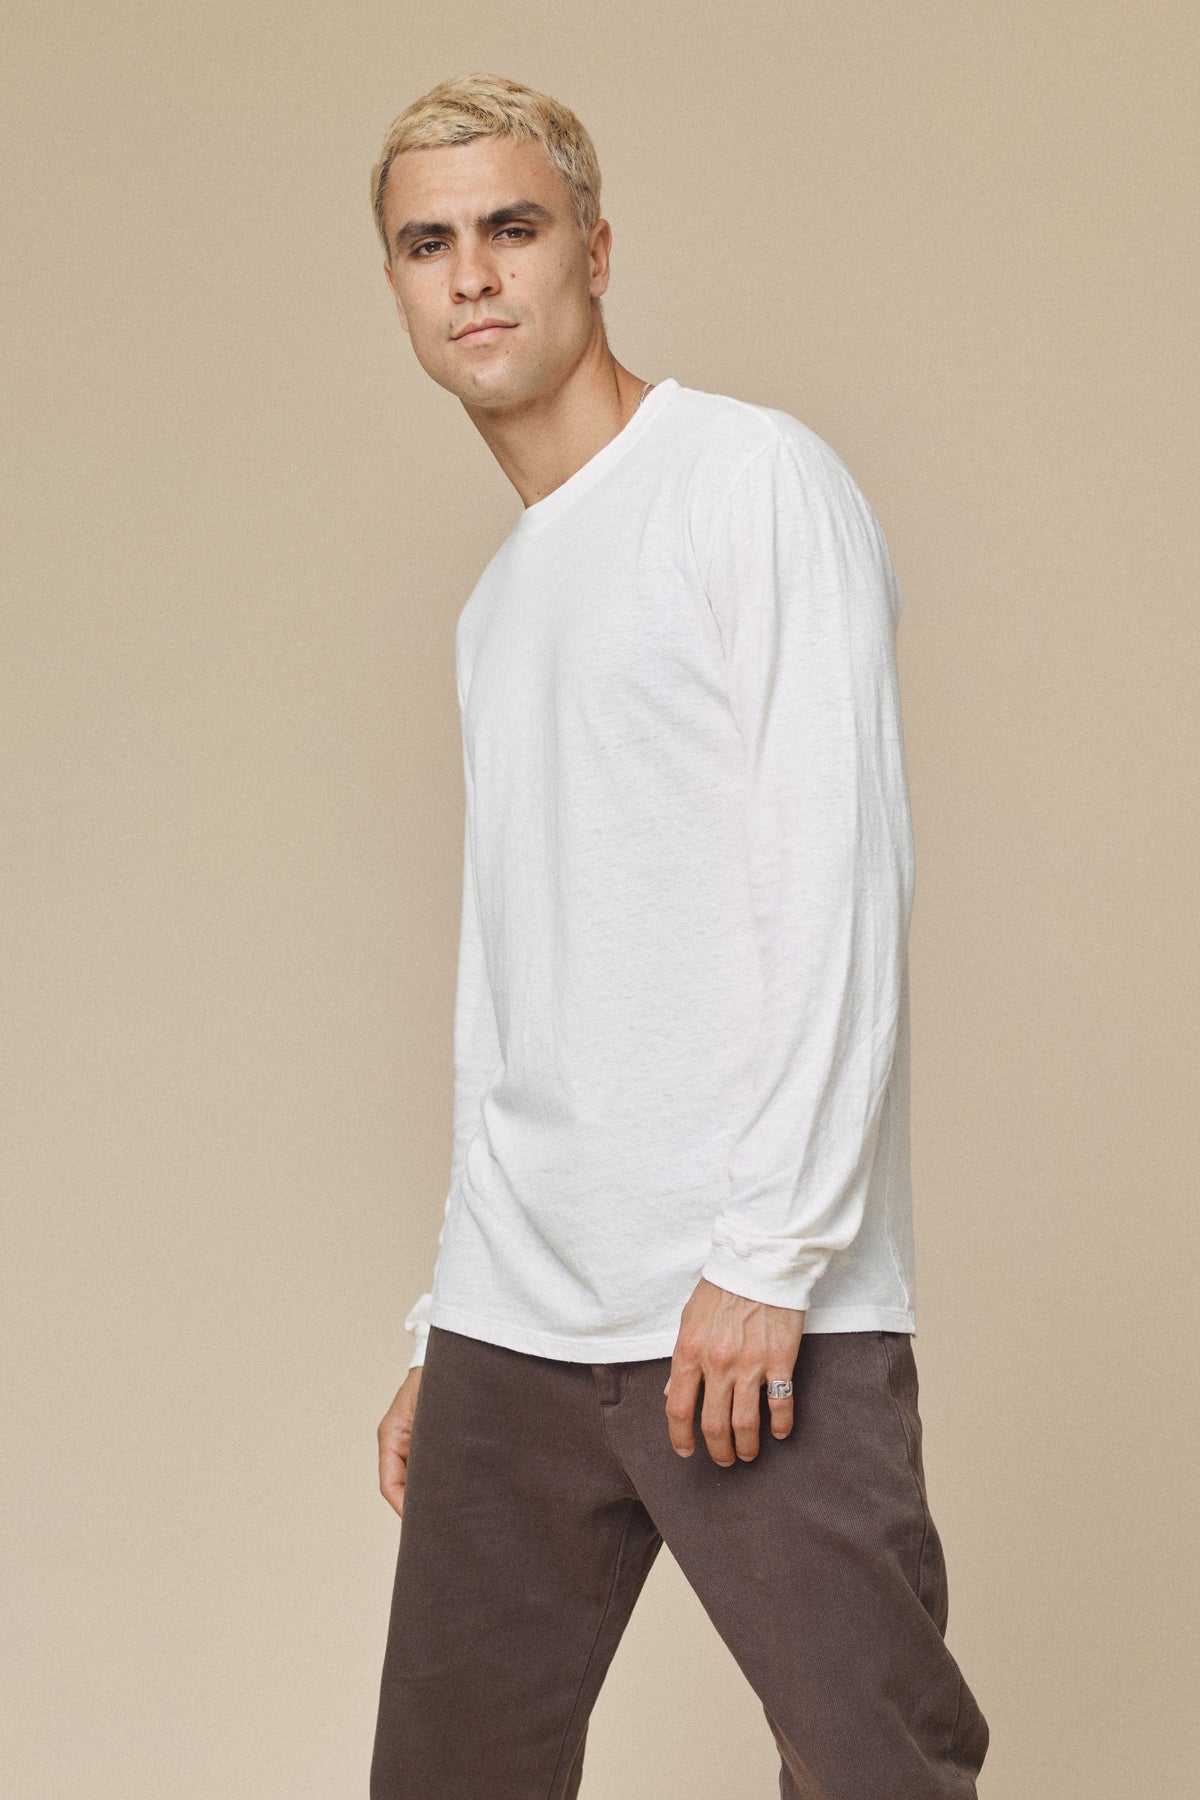 Jung Long Sleeve Tee | Jungmaven Hemp Clothing & Accessories / model_desc: Shen is 6’2” wearing L